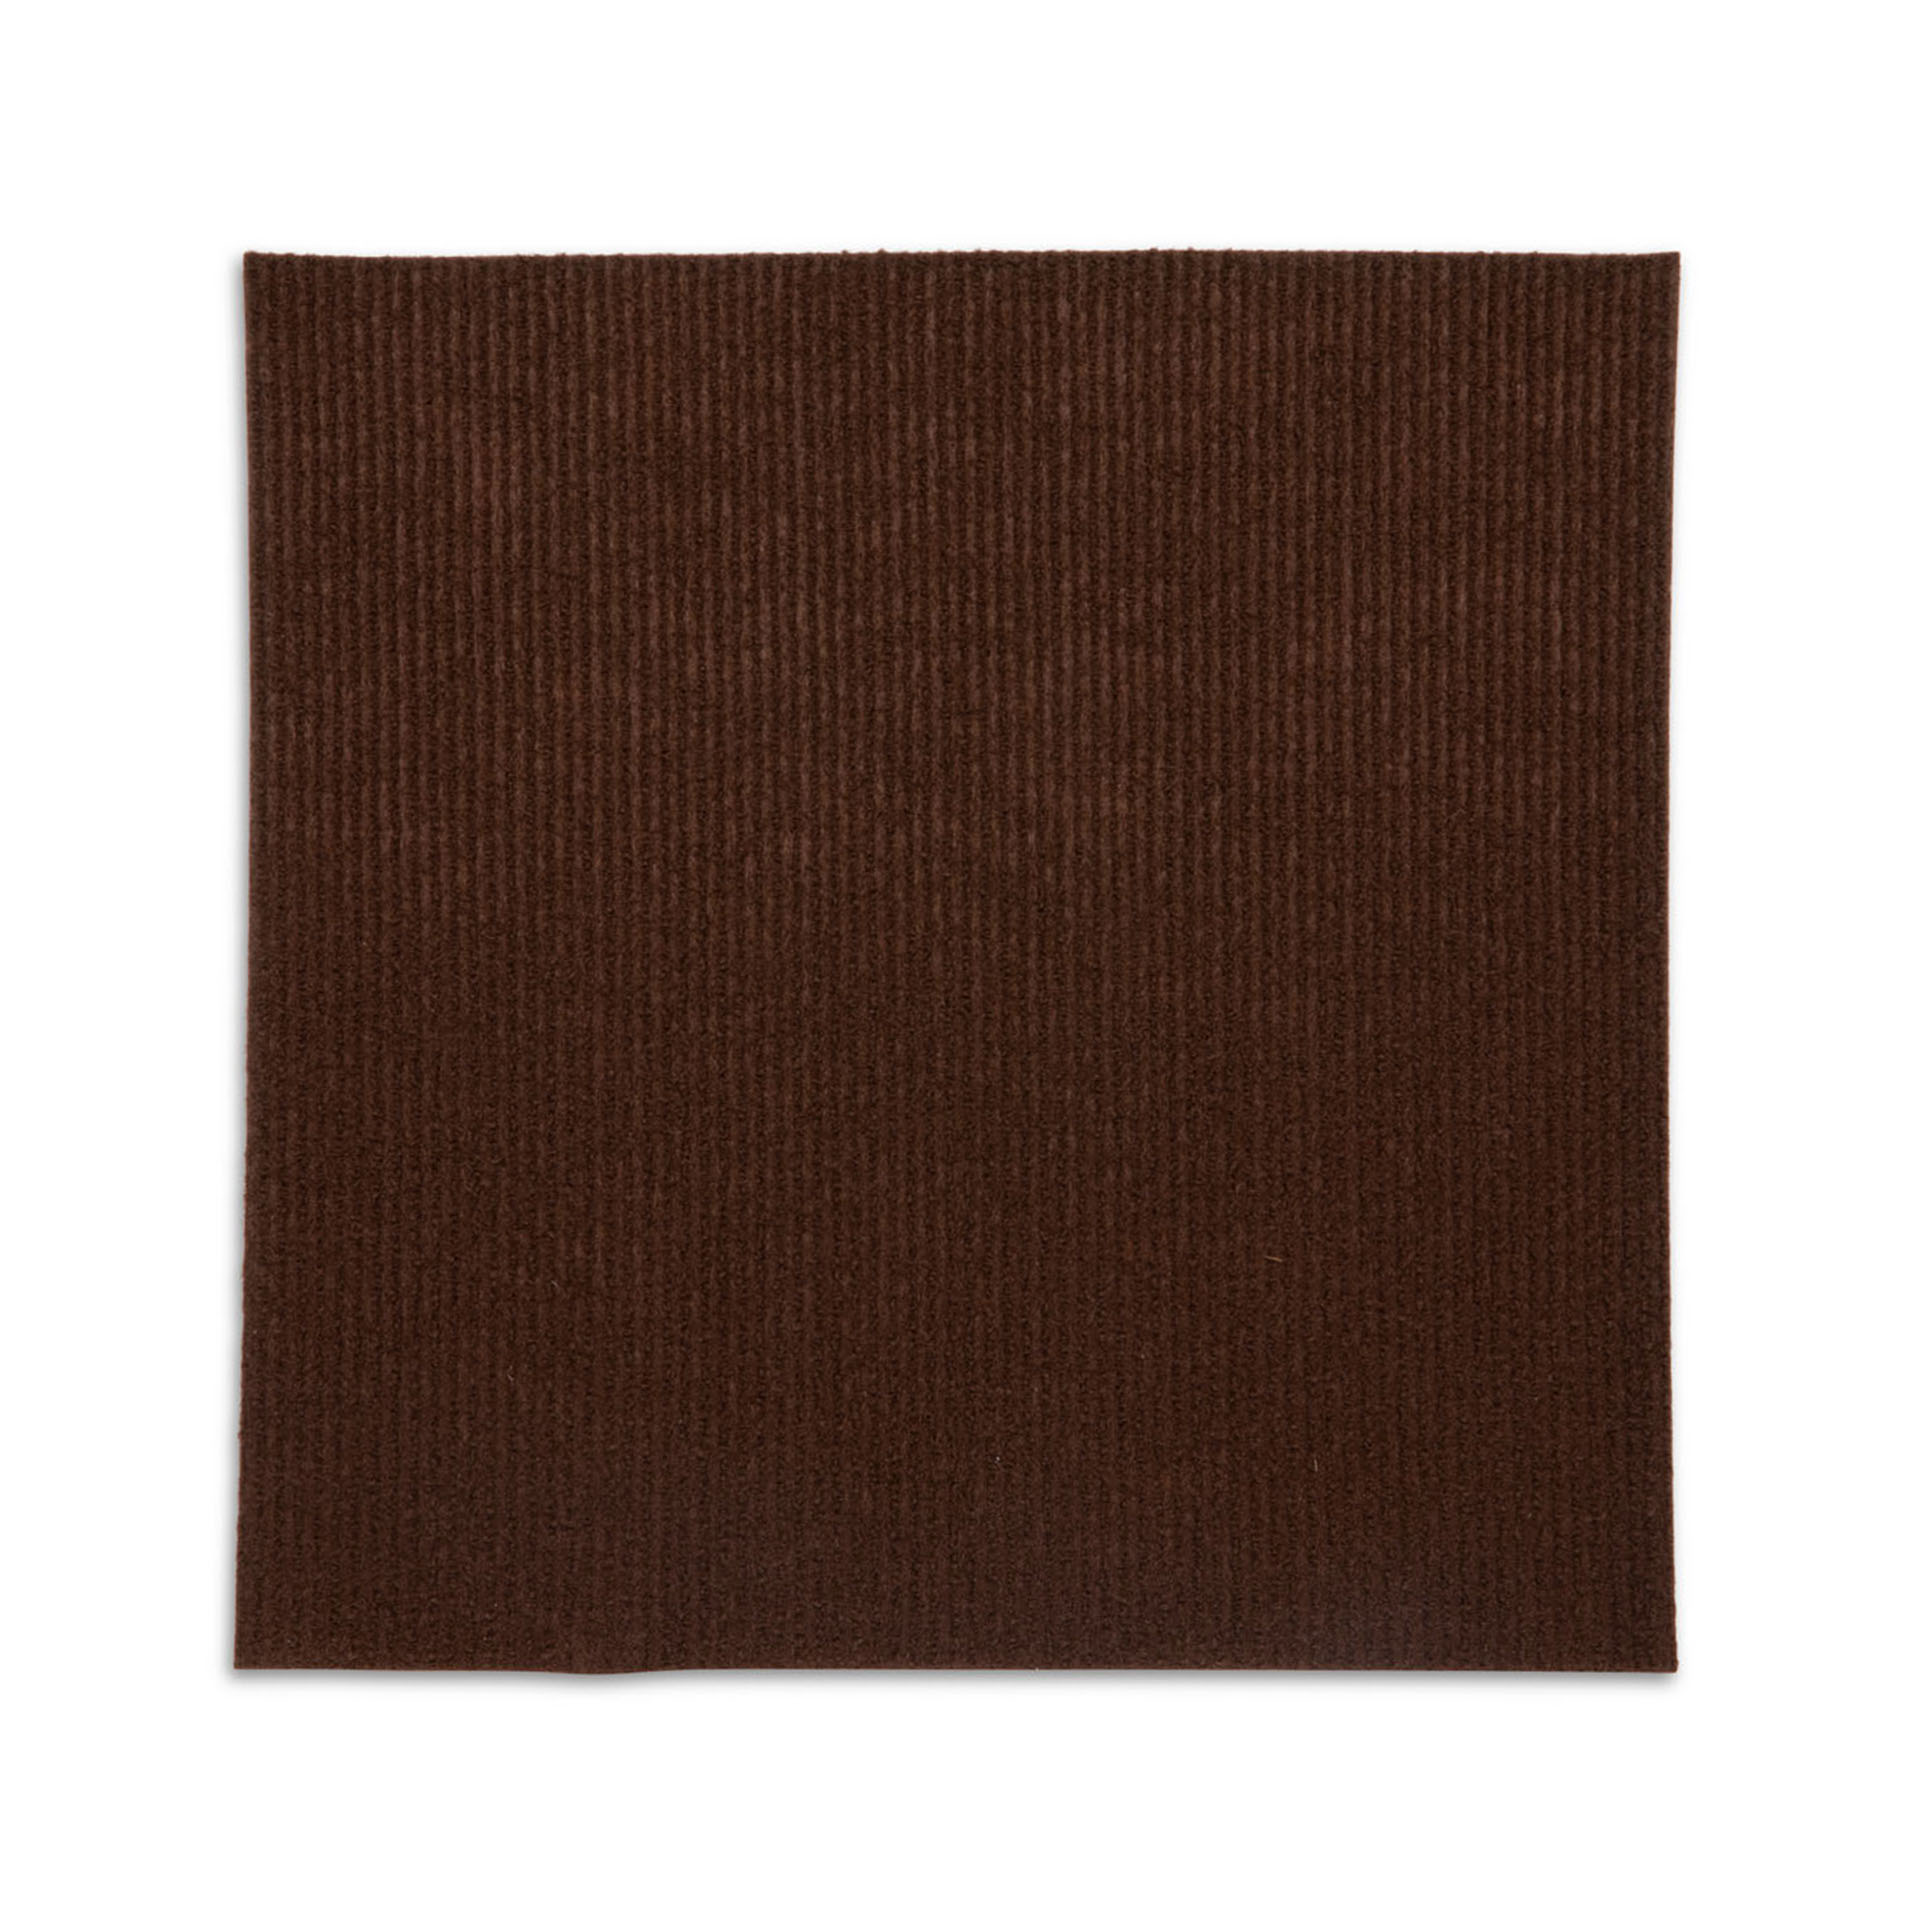 Moquette antiscivolo 30 x 30 cm - Set da 10 pz, marrone, large